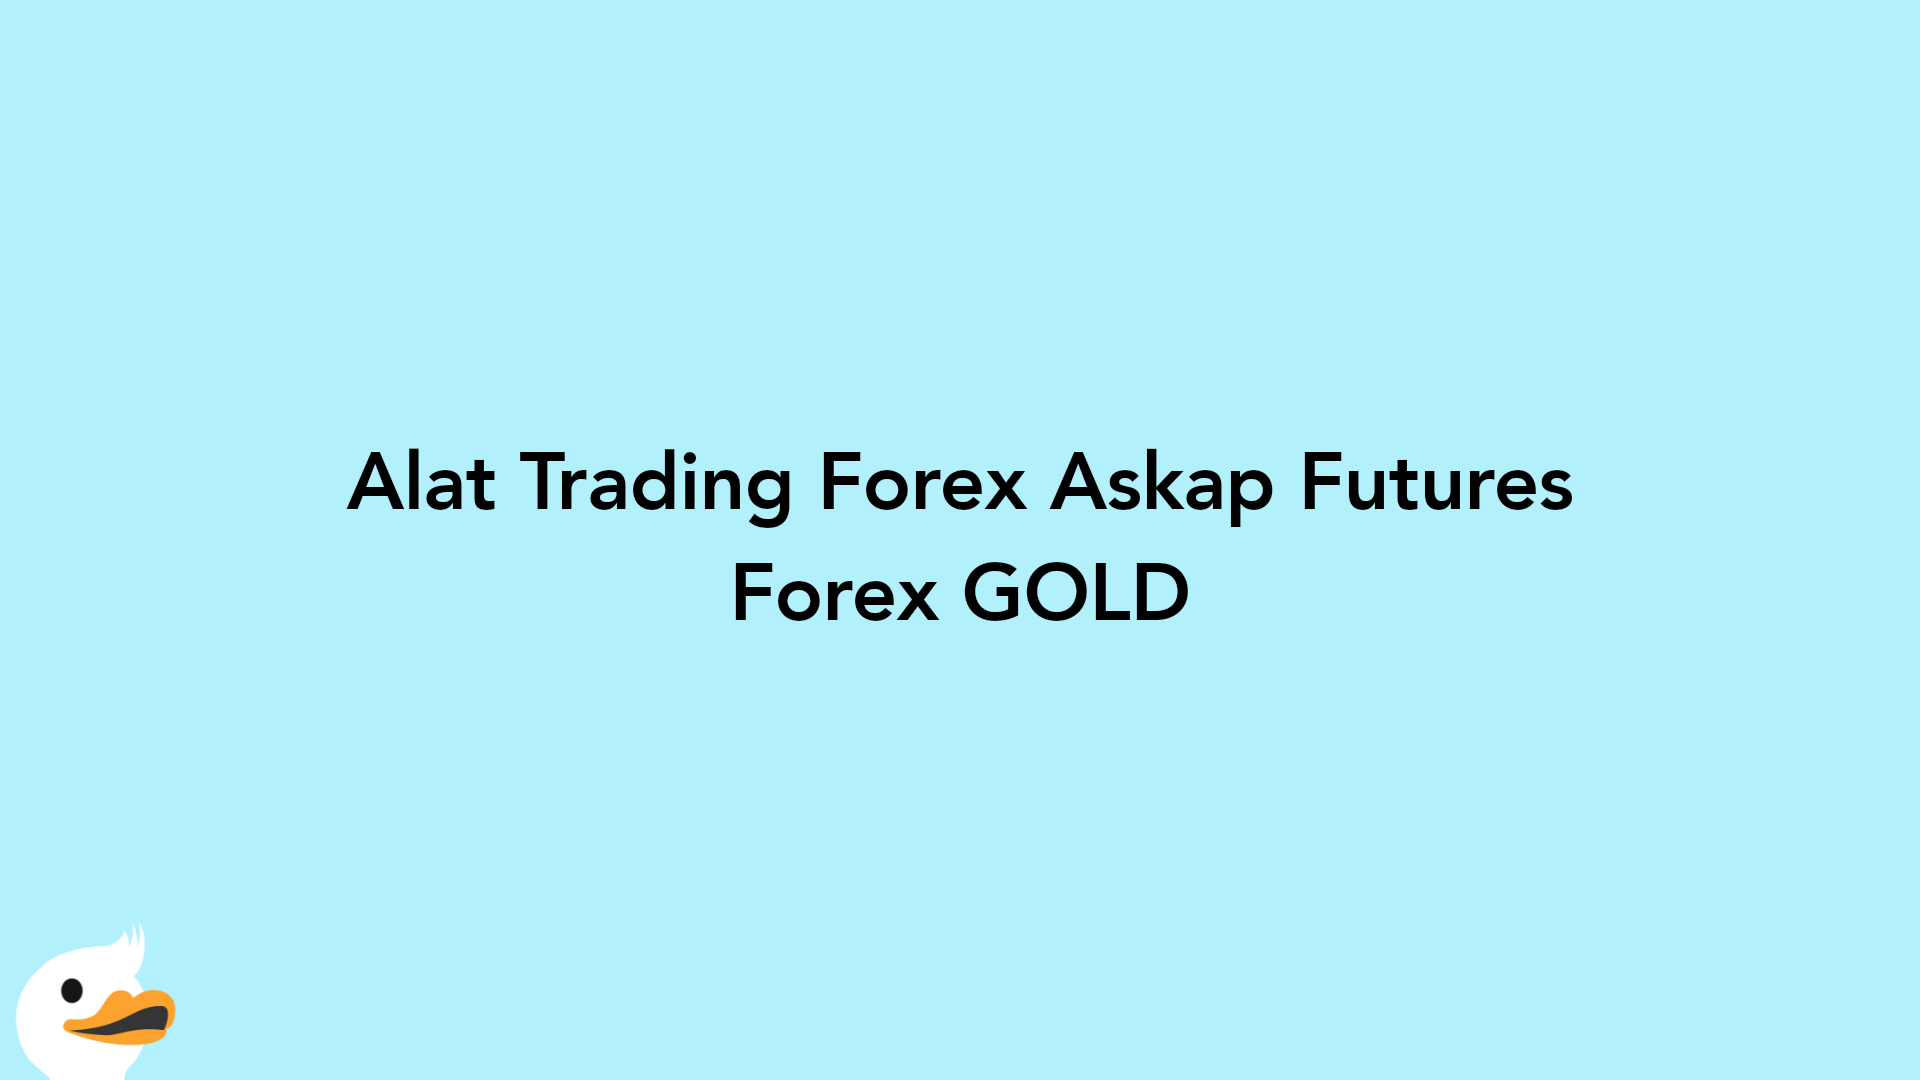 Alat Trading Forex Askap Futures Forex GOLD